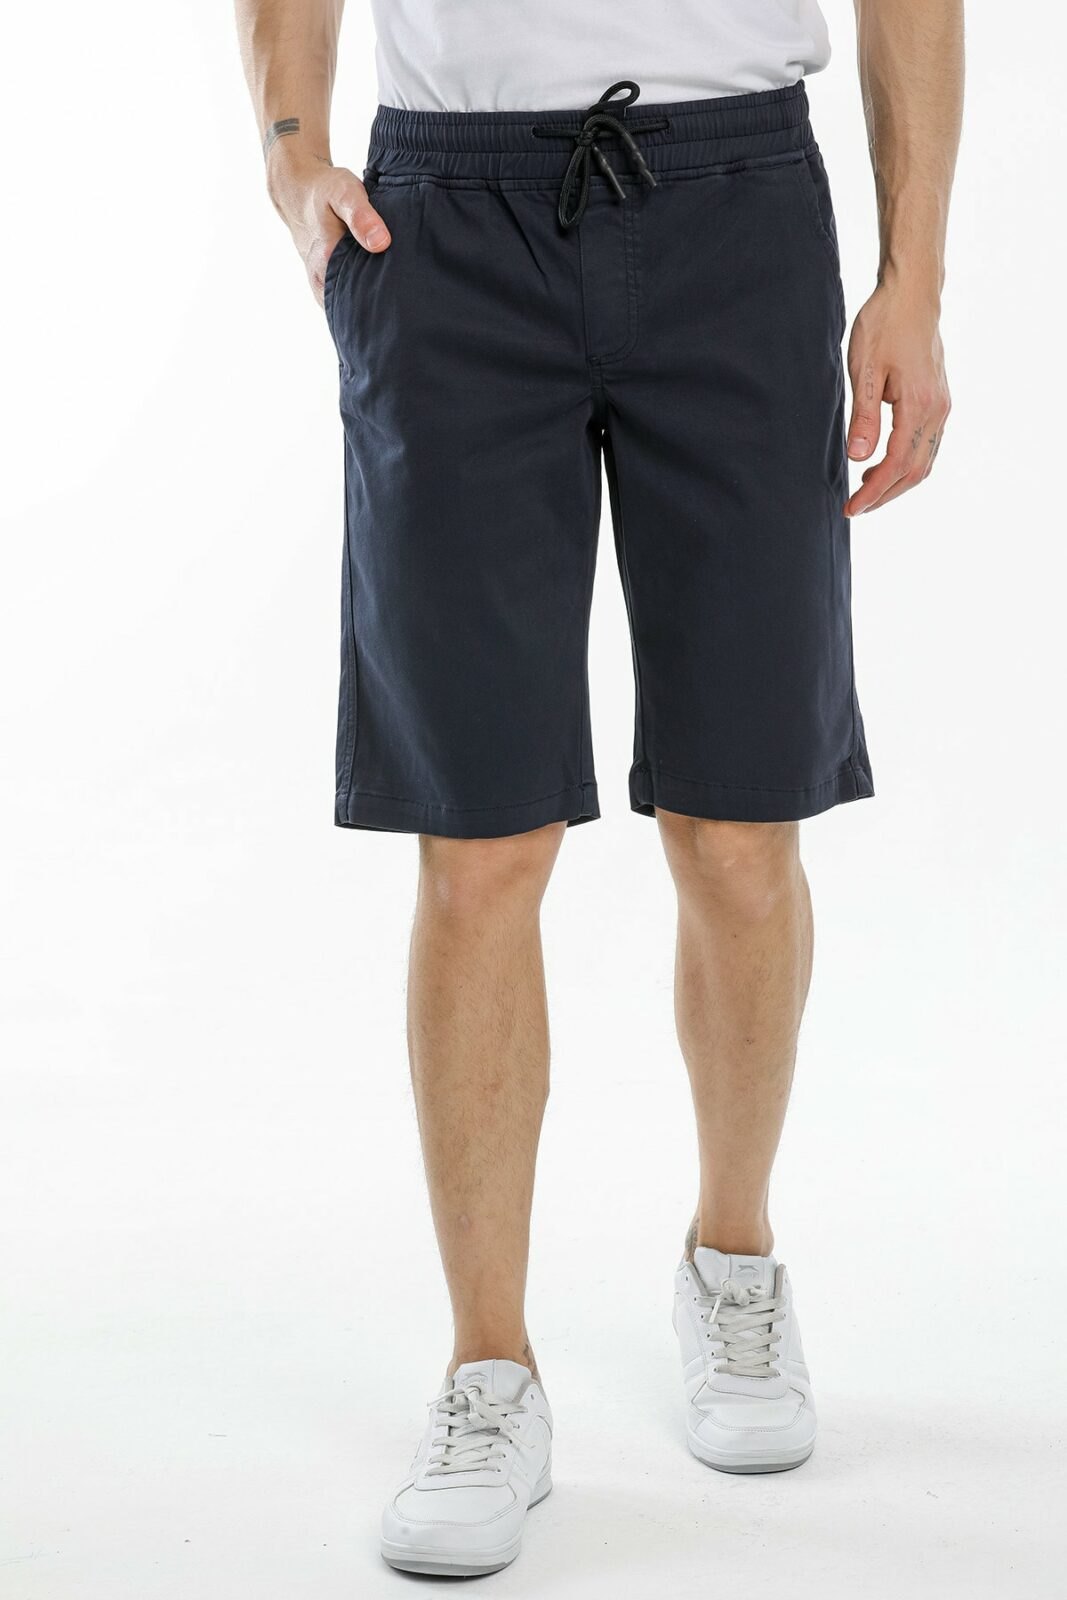 Slazenger Shorts - Navy blue